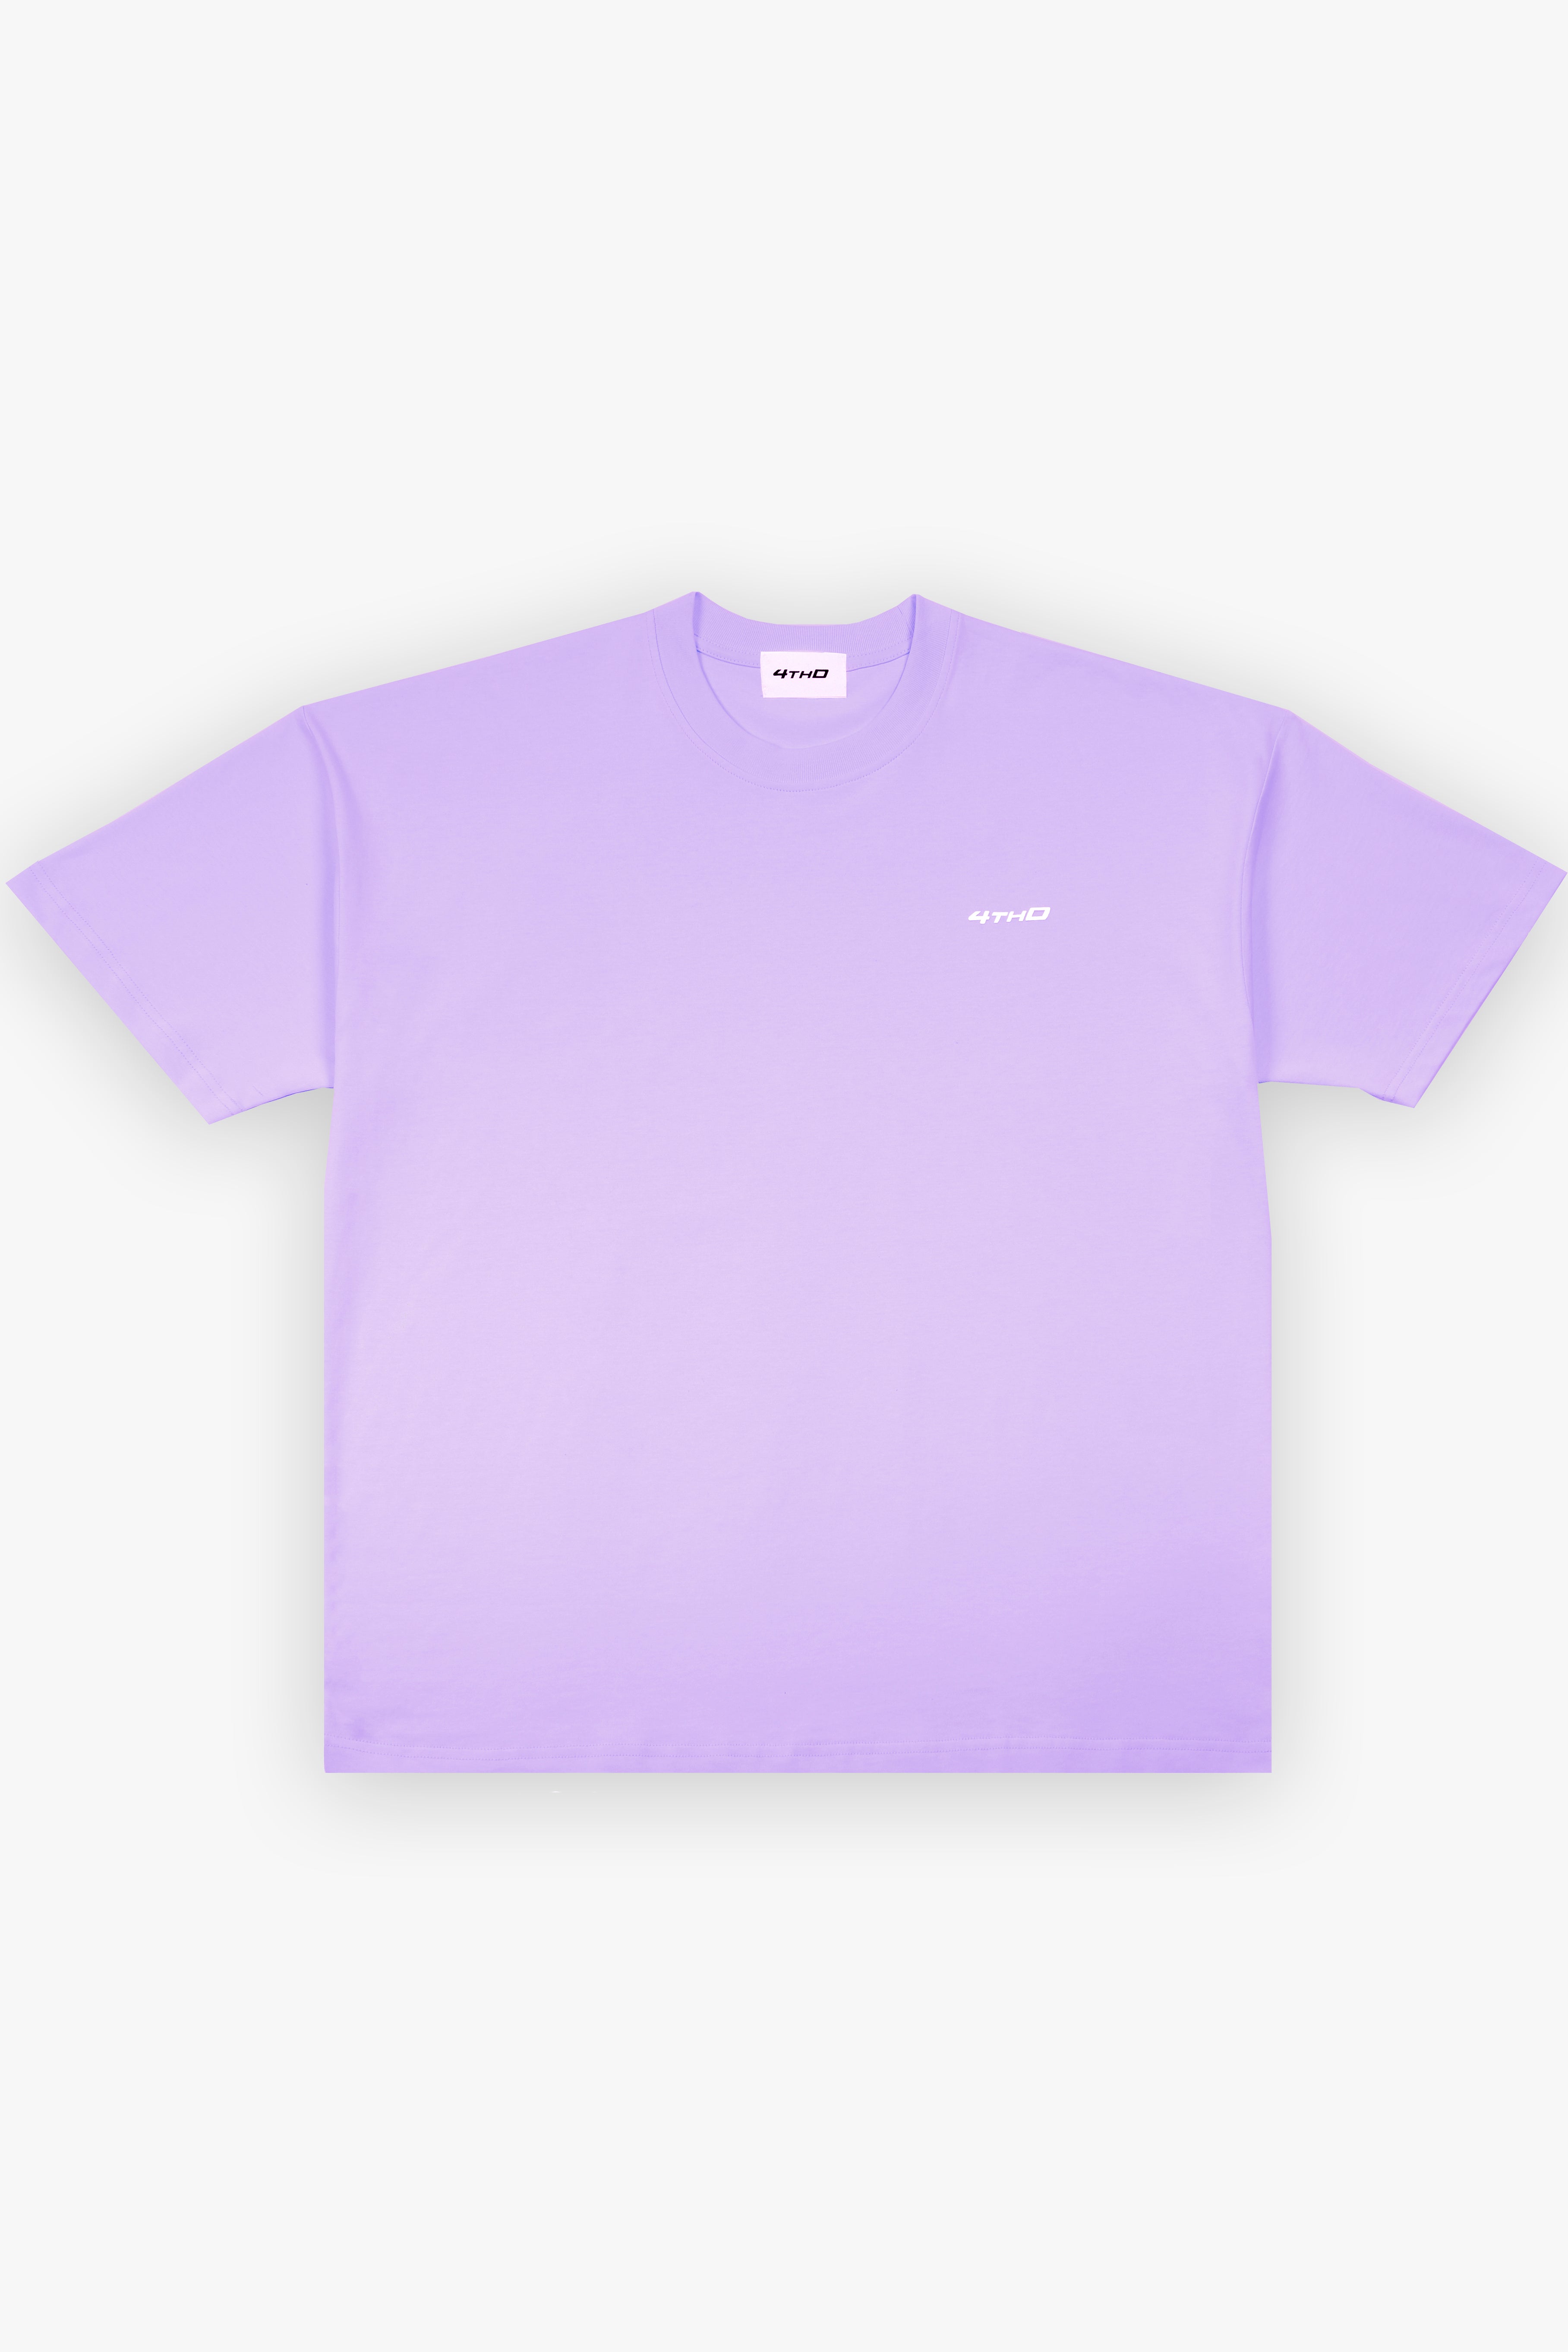 Pantone Shirt- Lilac